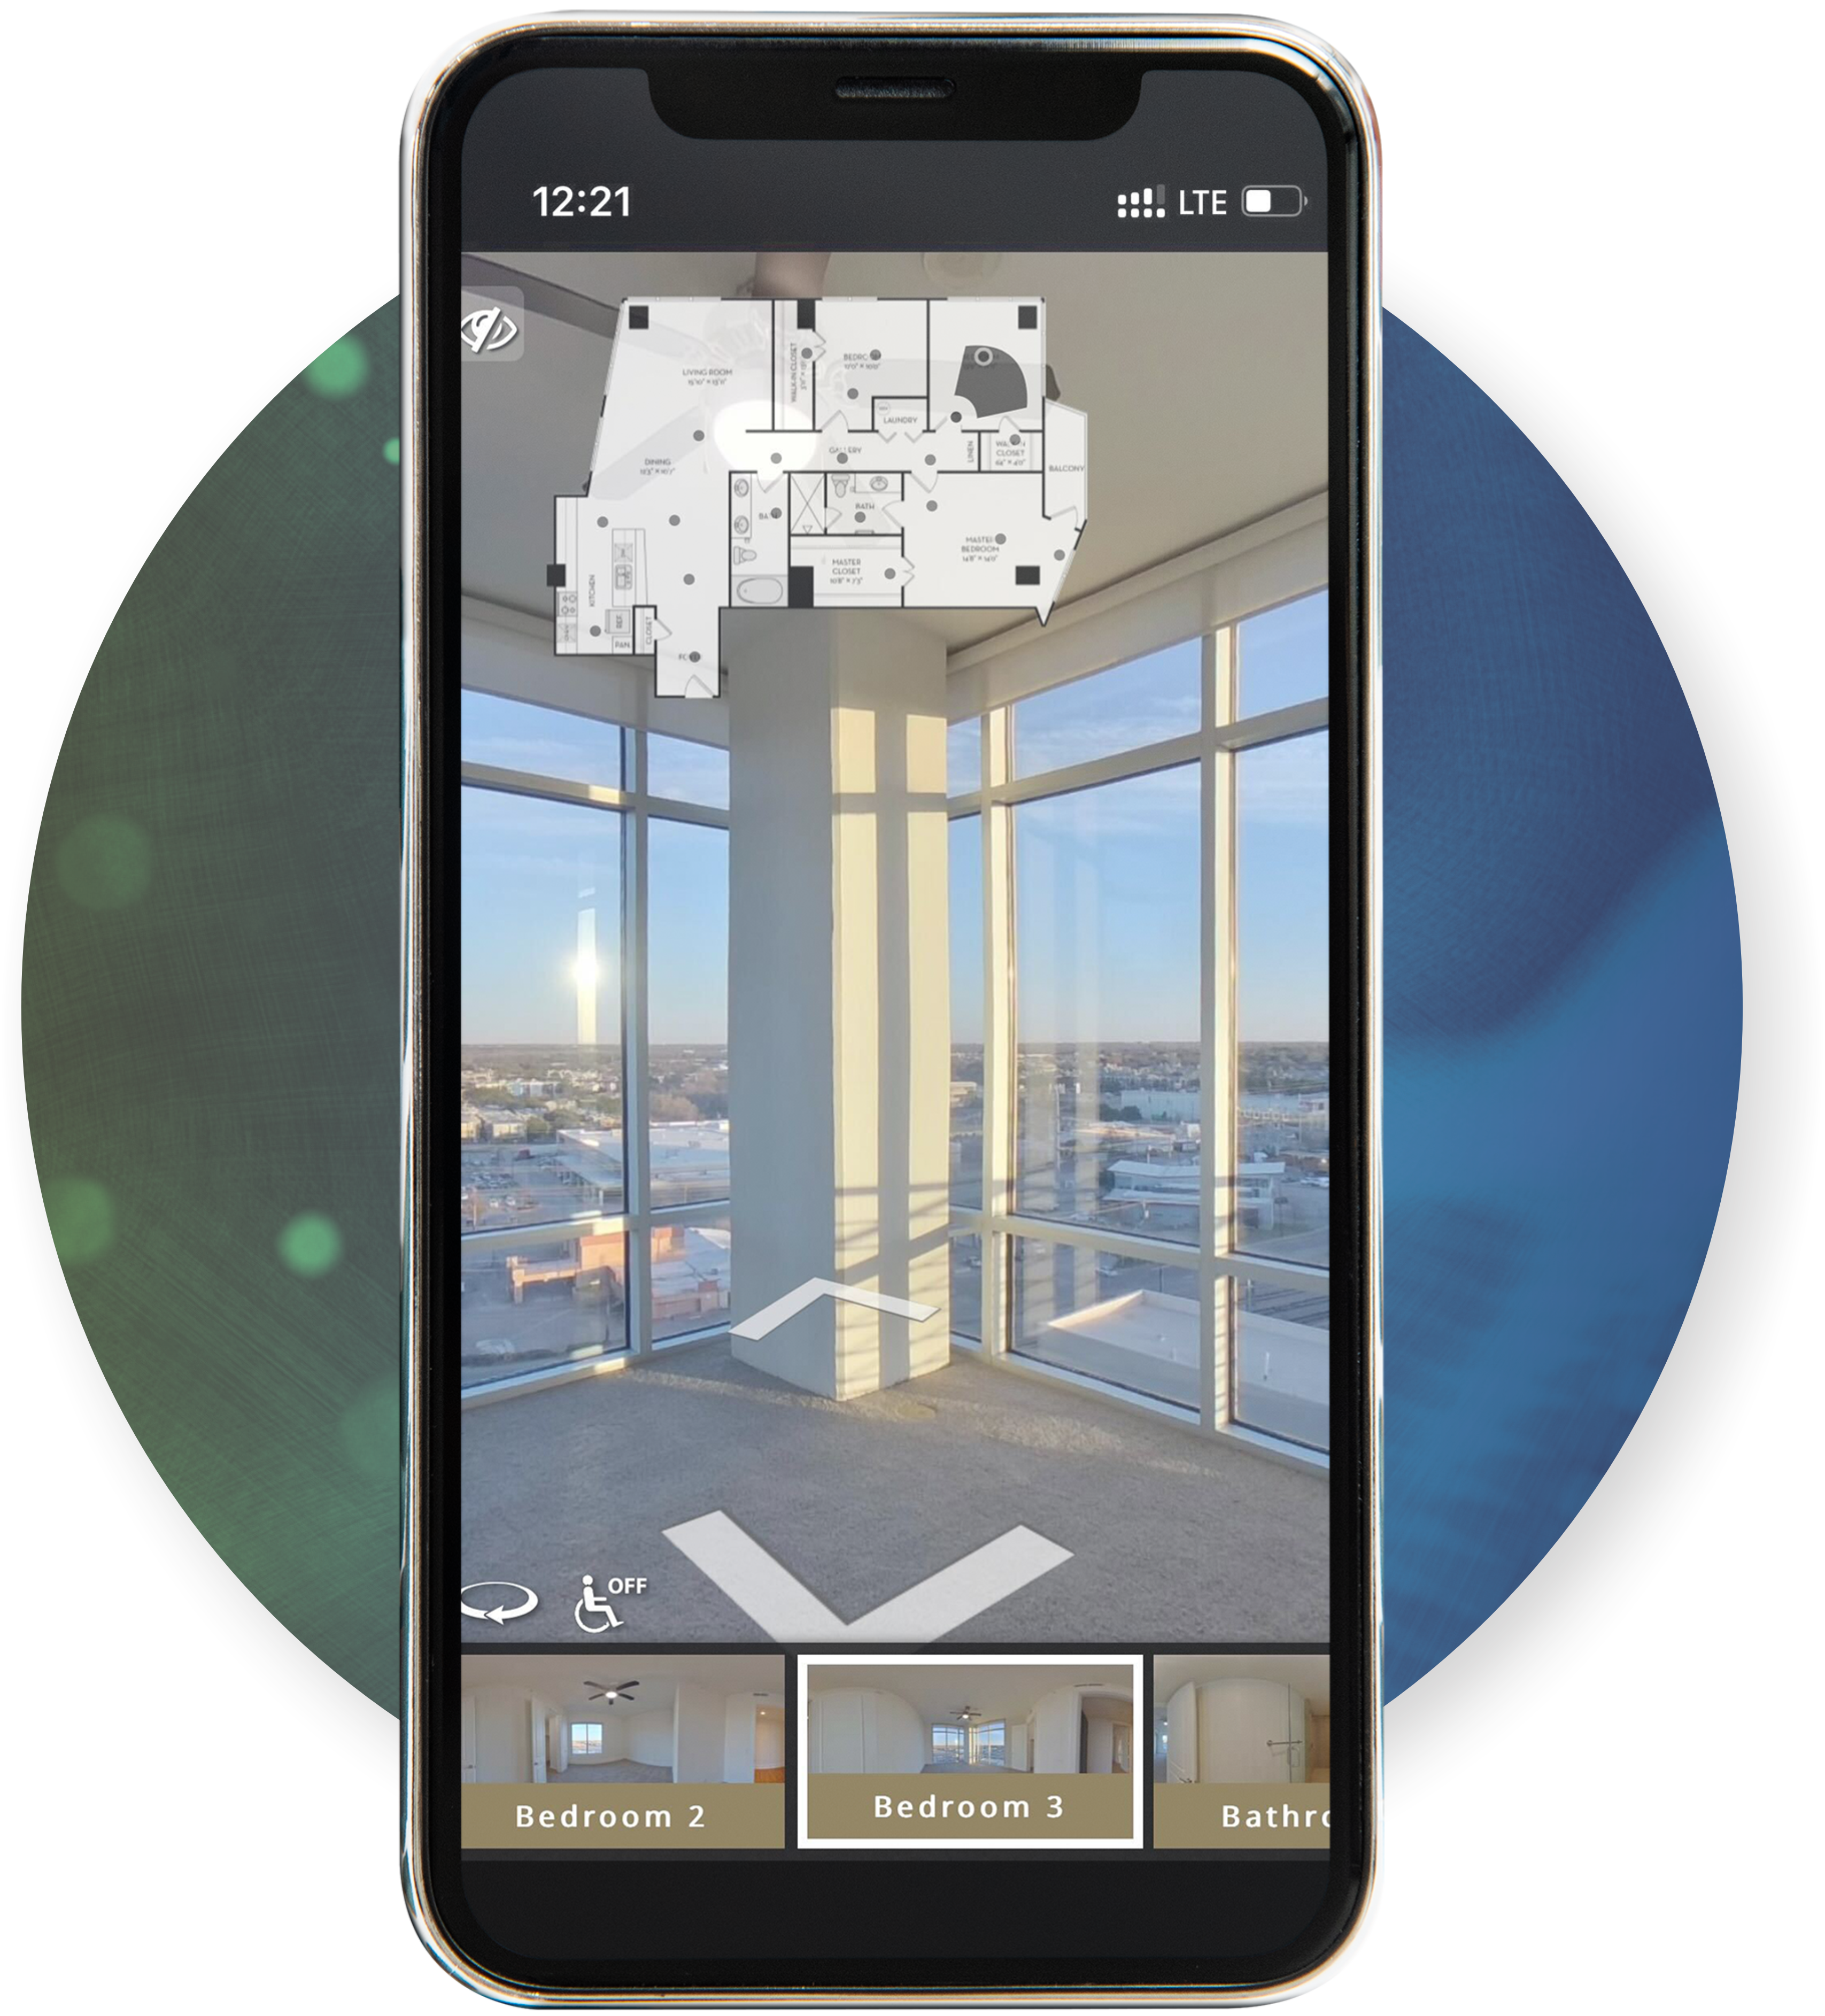 TourBuilder Go virtual tour of apartment unit on iPhone